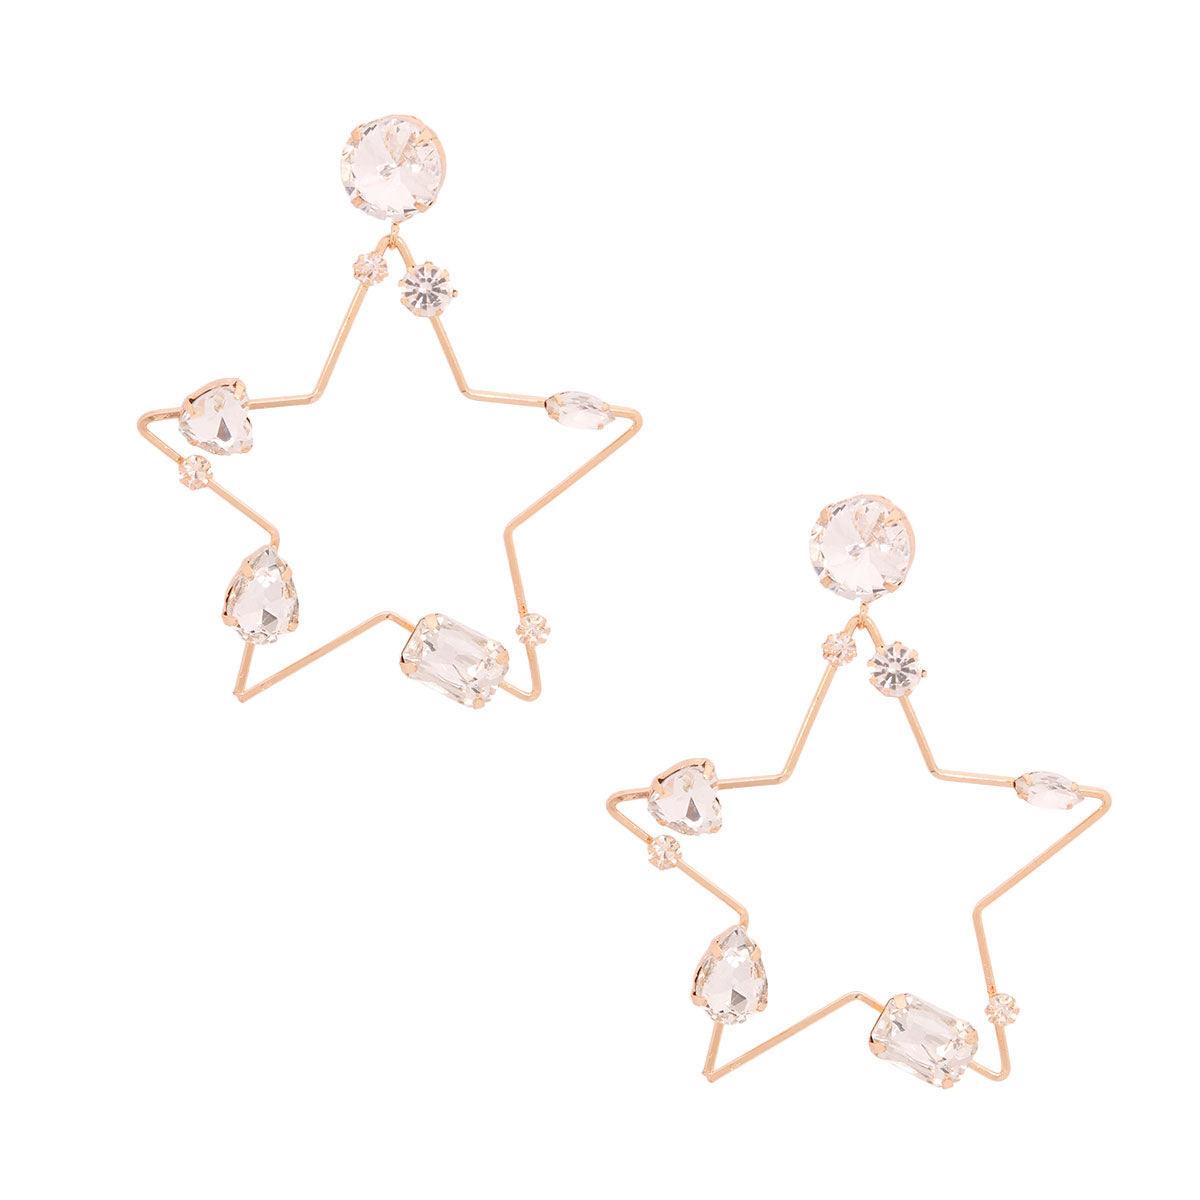 Shine like a star with Glory Star Earrings - Limited Stock!